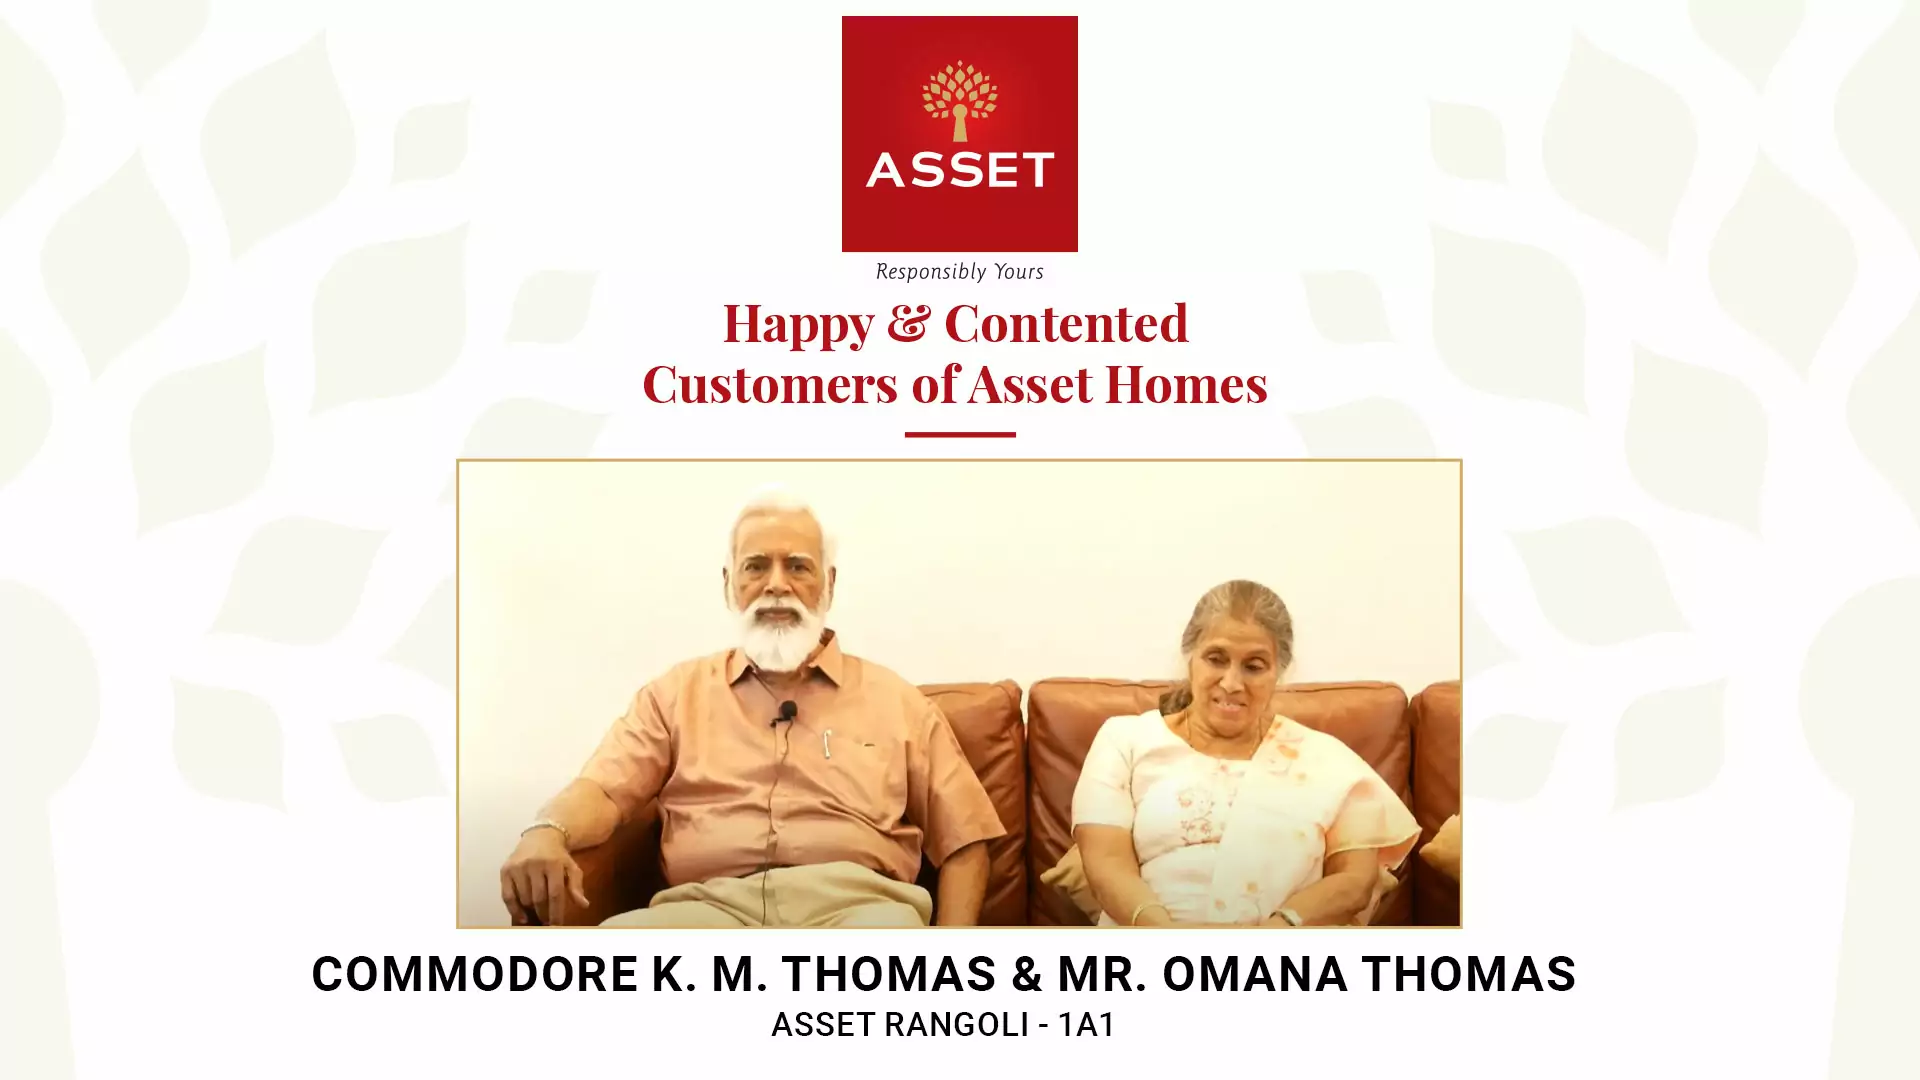 Commodore K. M. Thomas & Mr. Omana Thomas, Asset Rangoli – 1A1